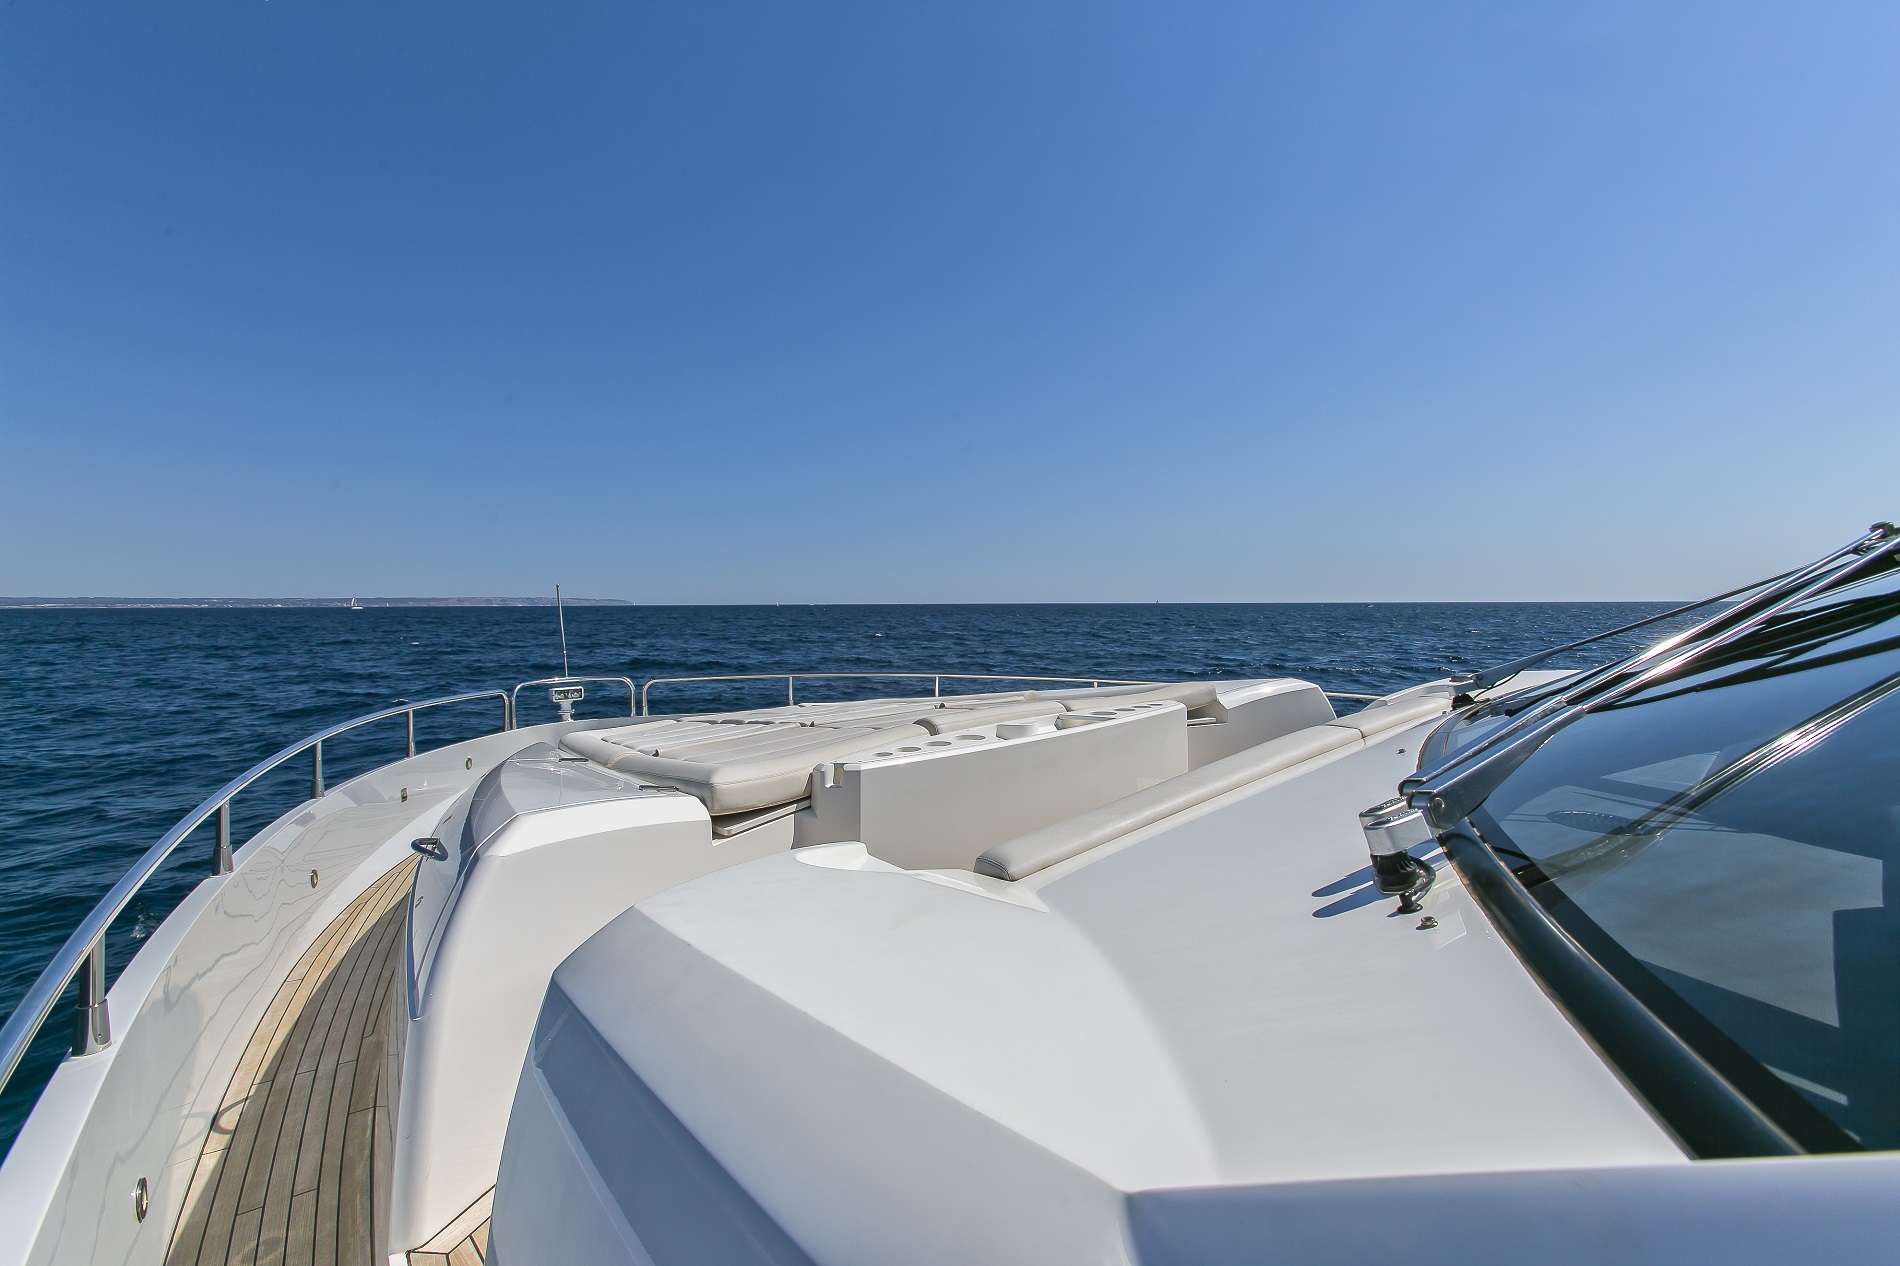 Sunseeker yacht 73M - Foredeck view forward